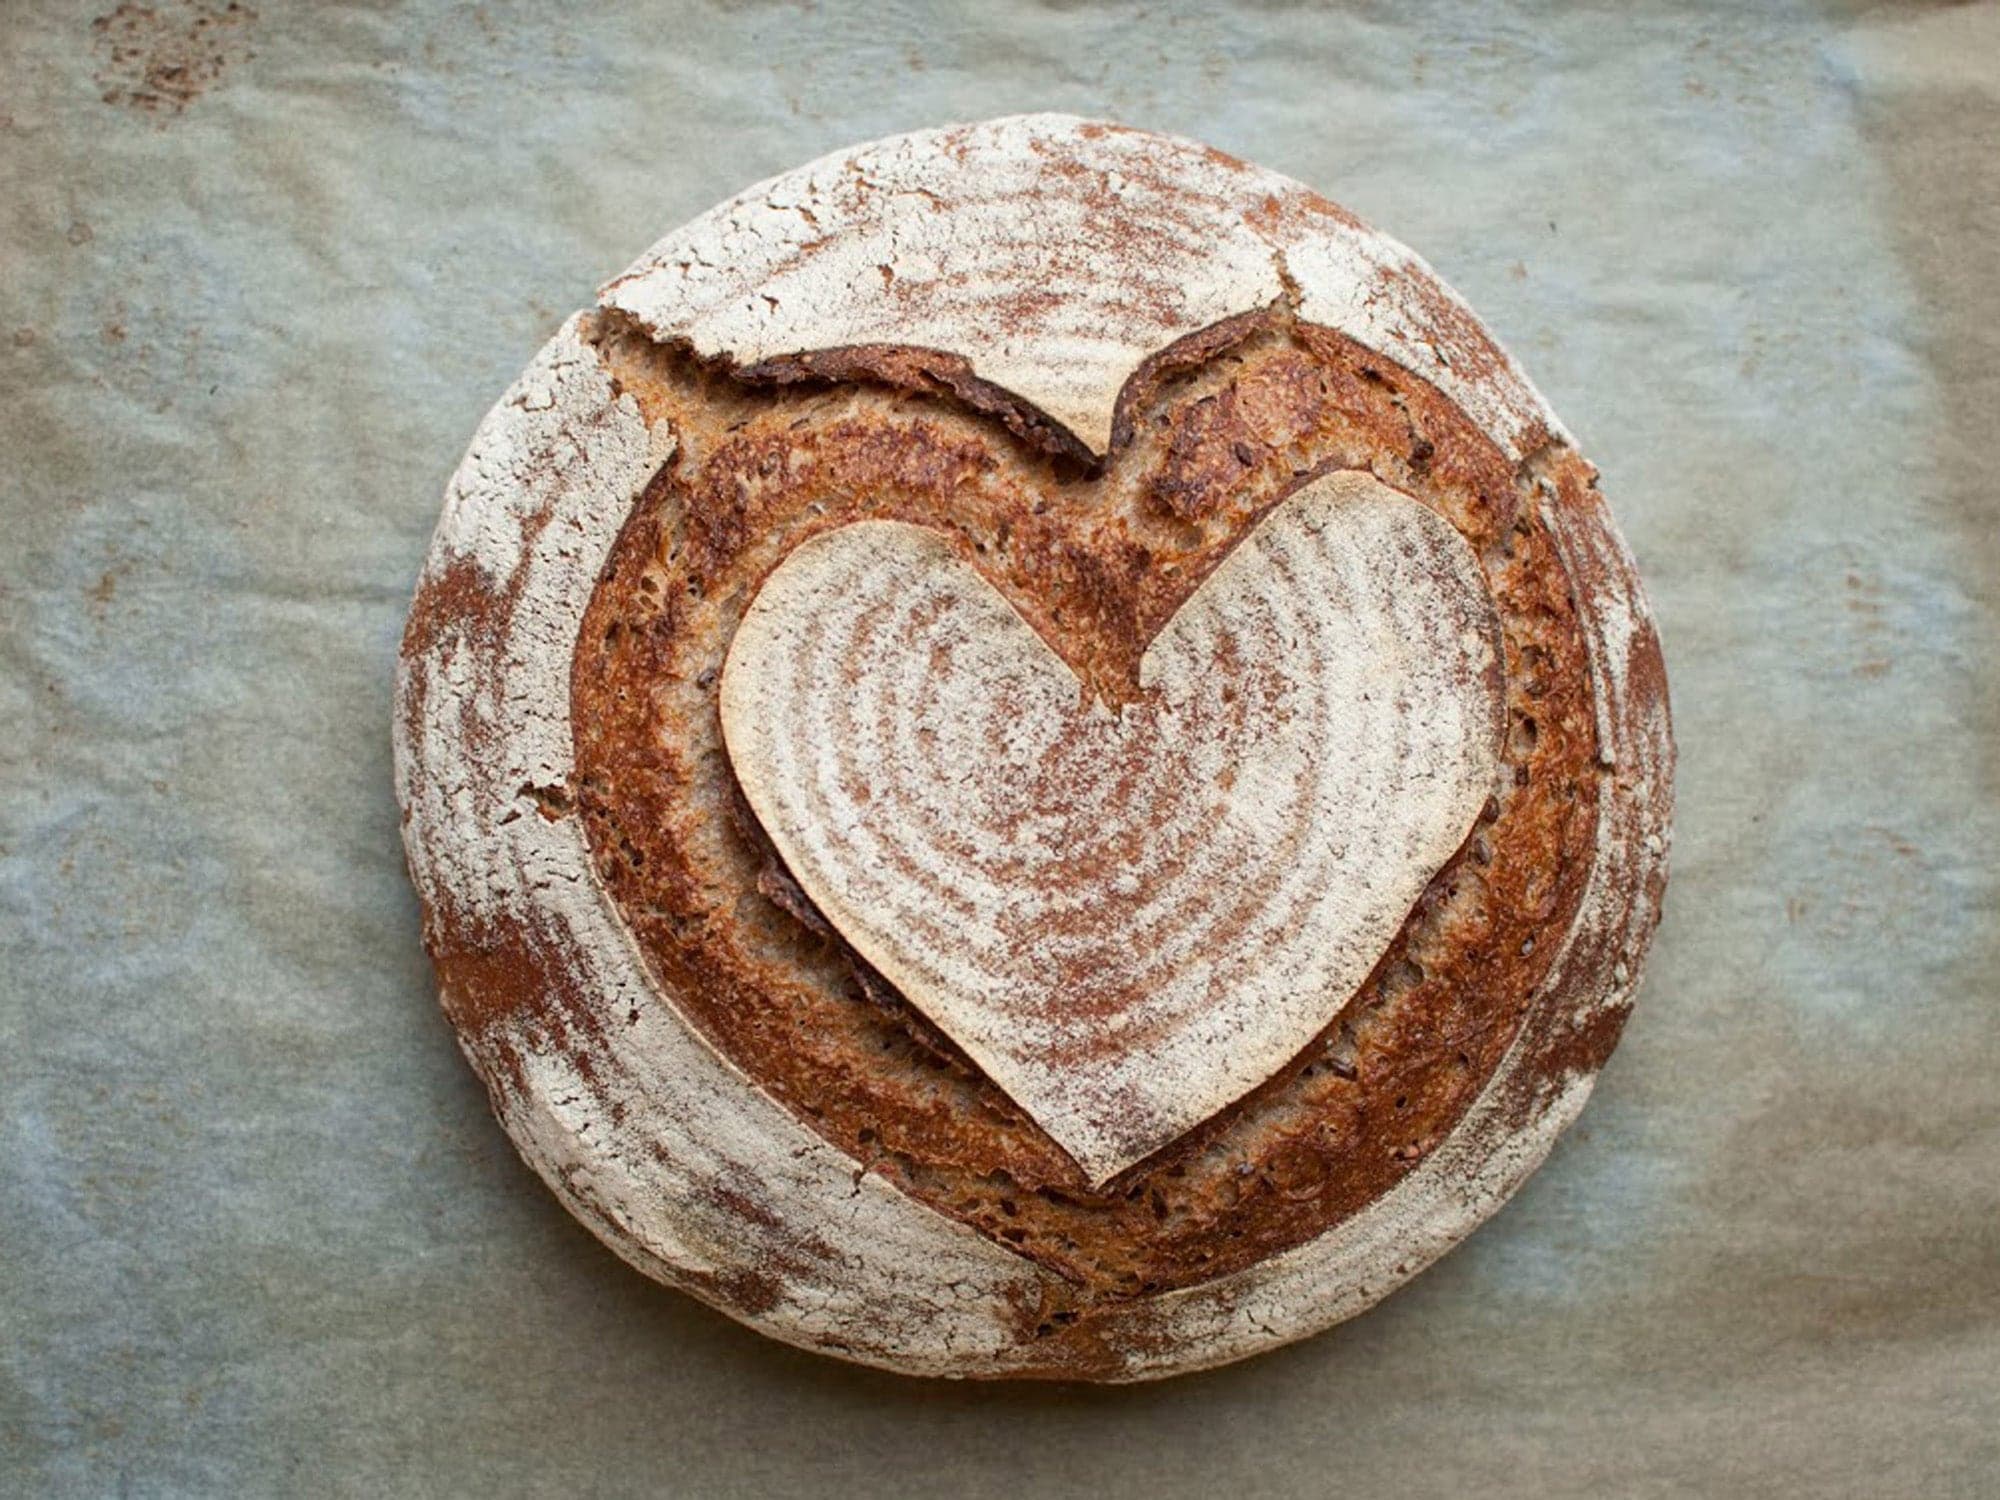 My Daily Sourdough Bread blog